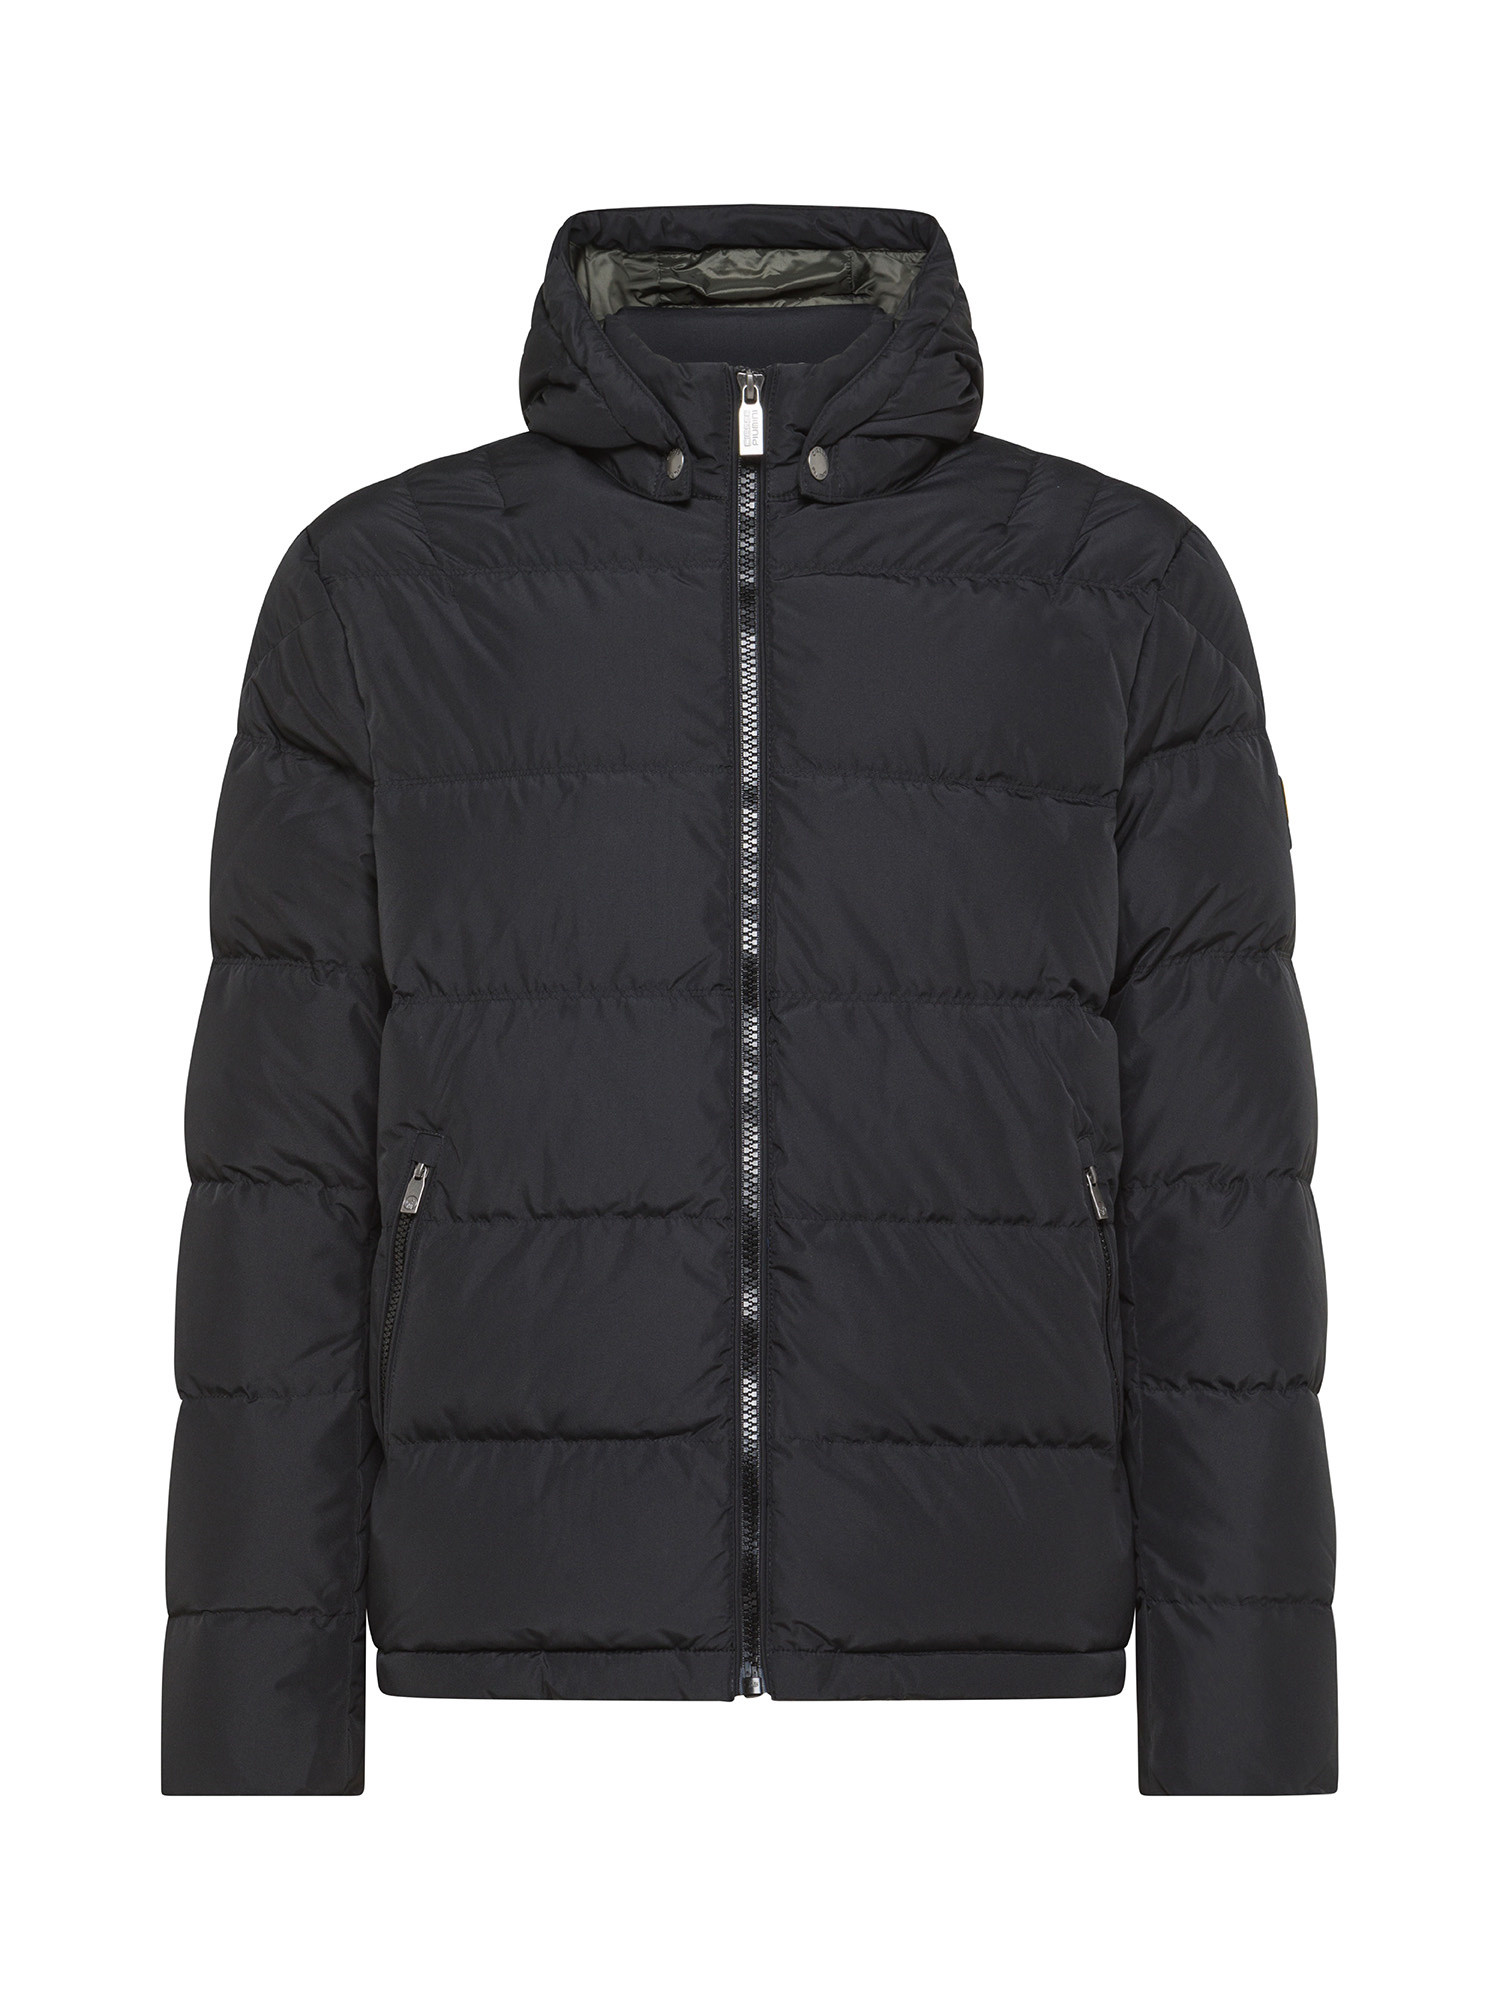 Ciesse Piumini - Down jacket with hood, Black, large image number 0